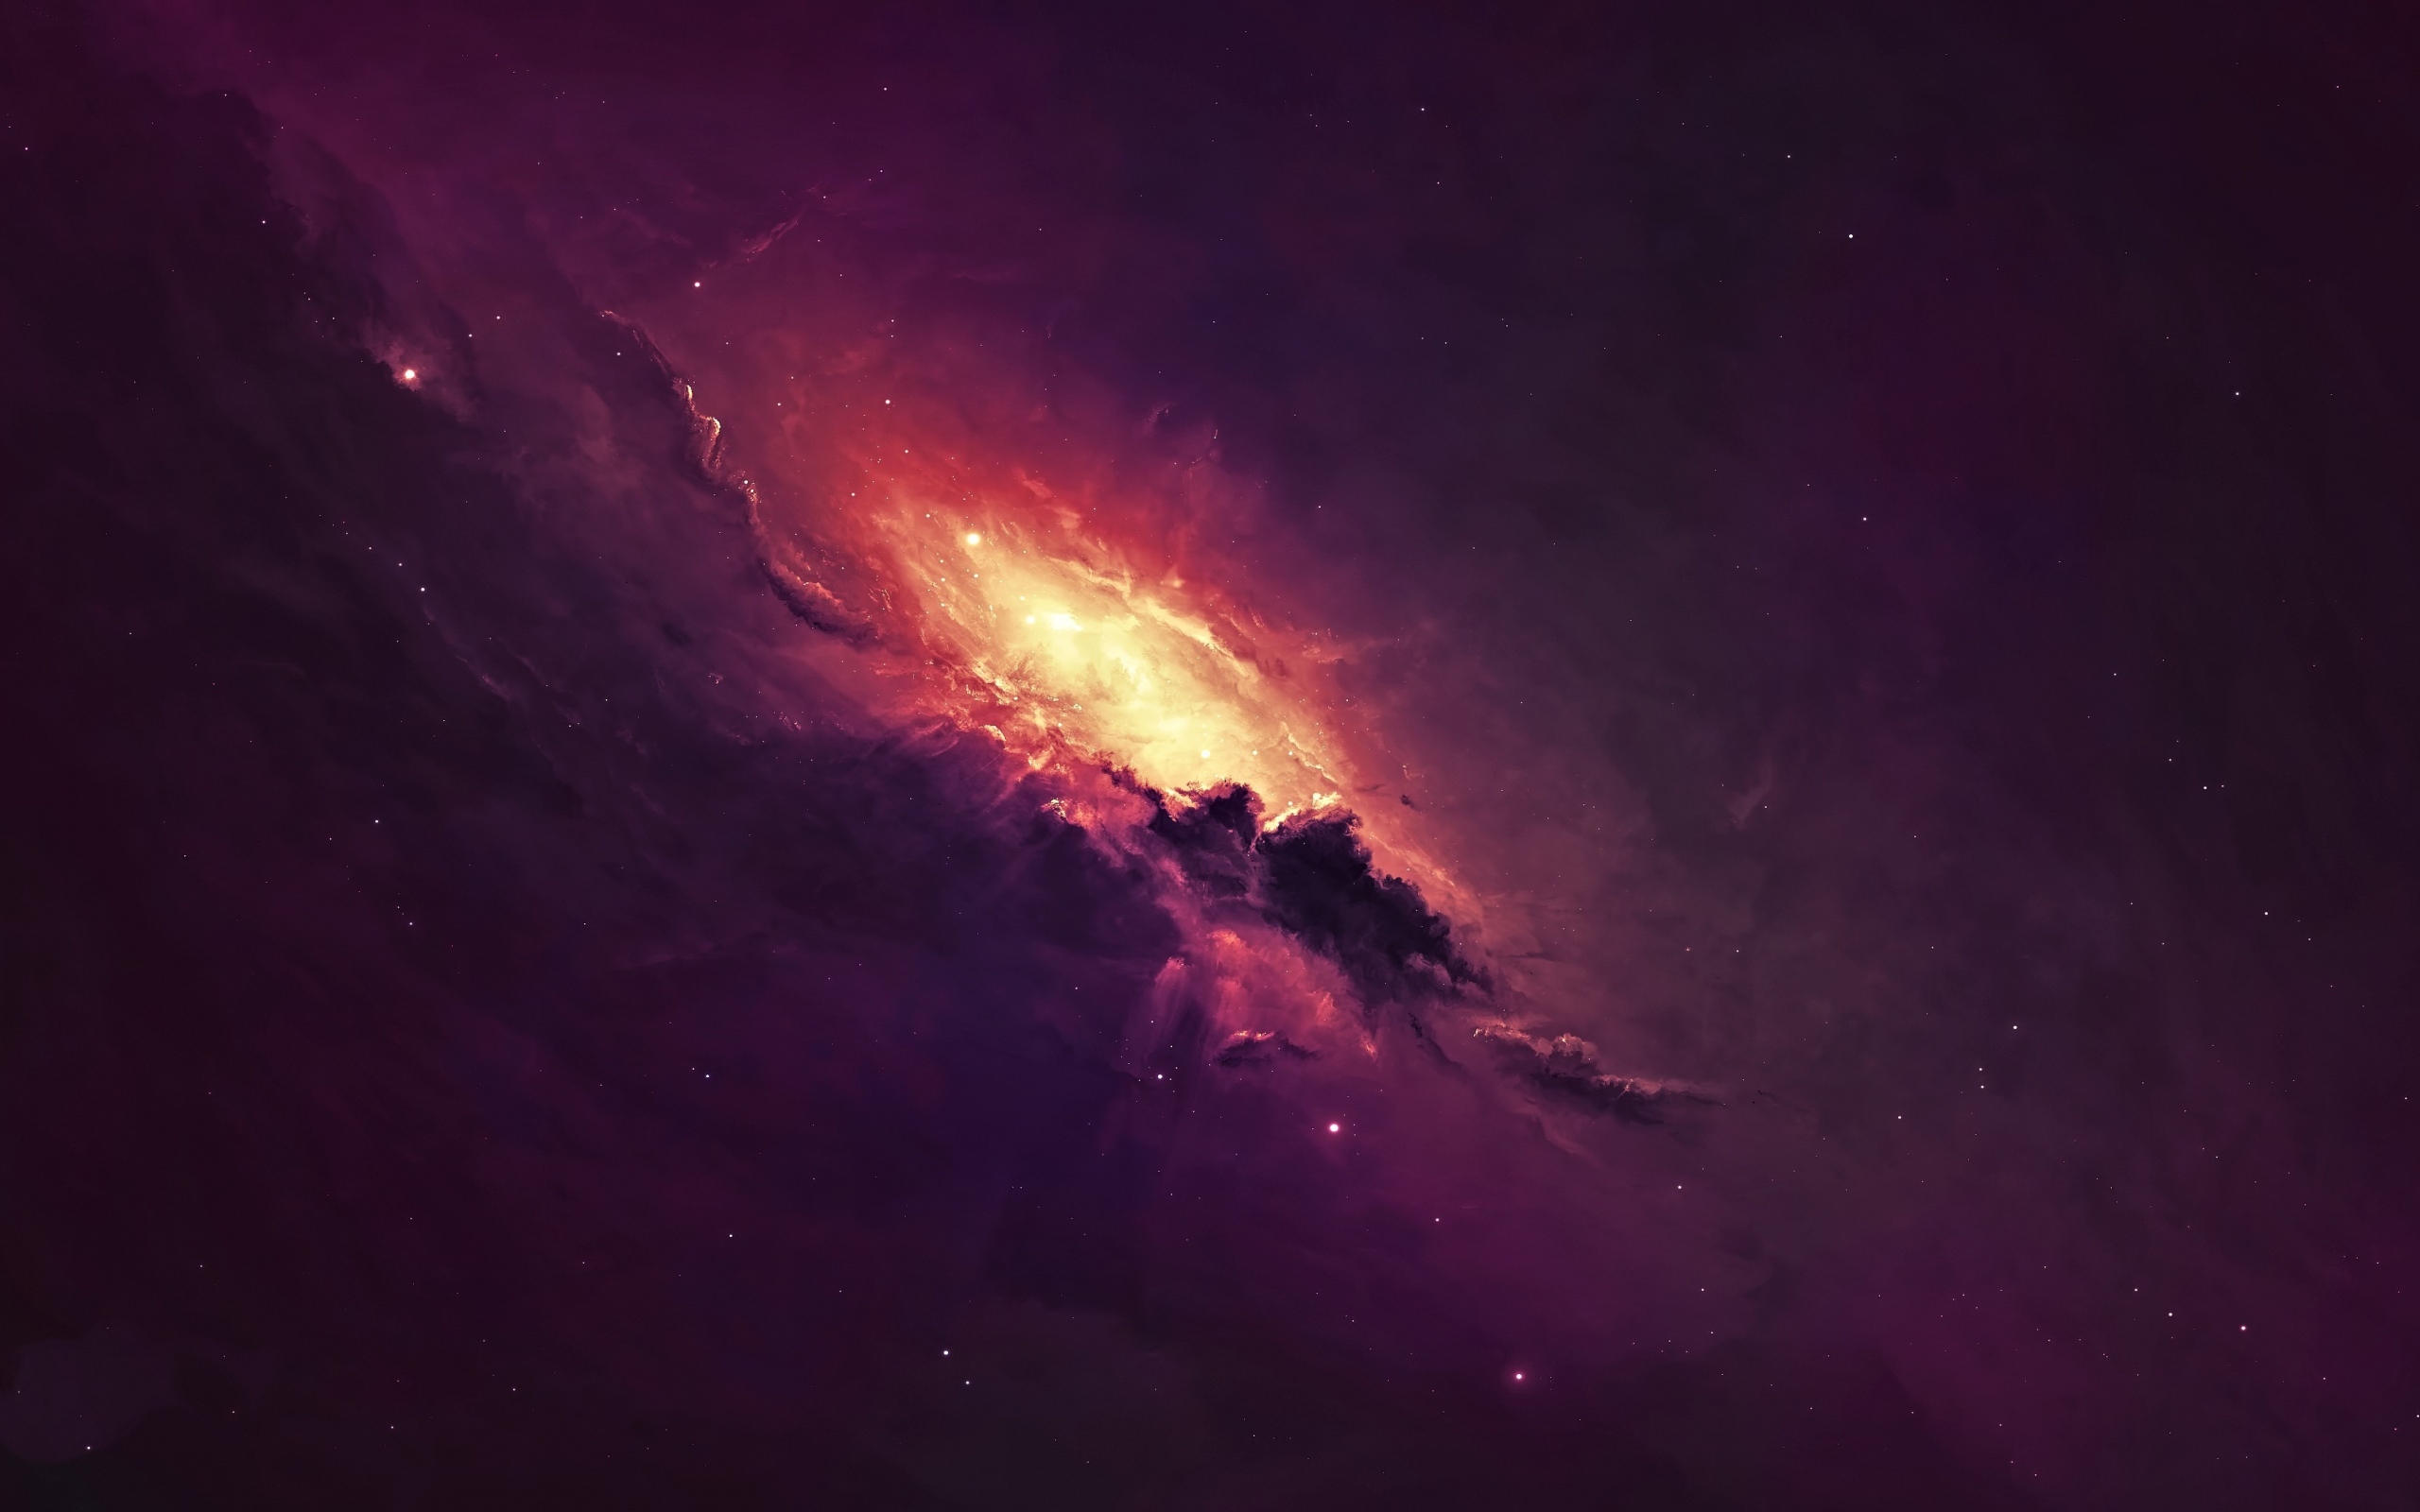 Download 2560x1600 Wallpaper Space Nebula Dark Clouds Dual Wide Widescreen 16 10 Widescreen 2560x1600 Hd Image Background 16